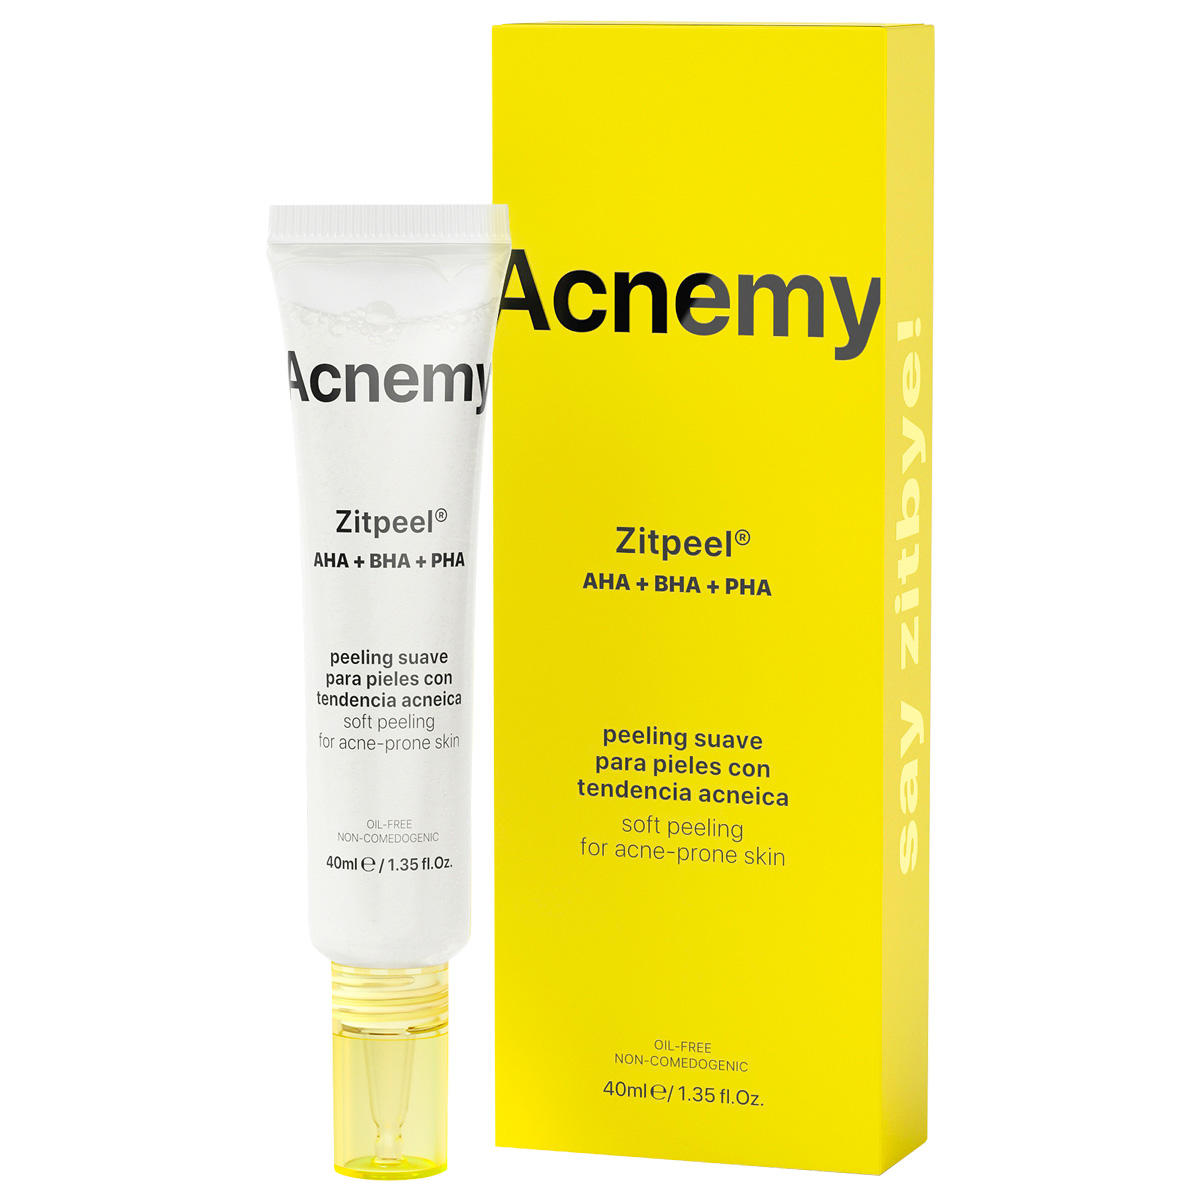 Acnemy ZITPEEL Soft Peeling 40 ml - 2